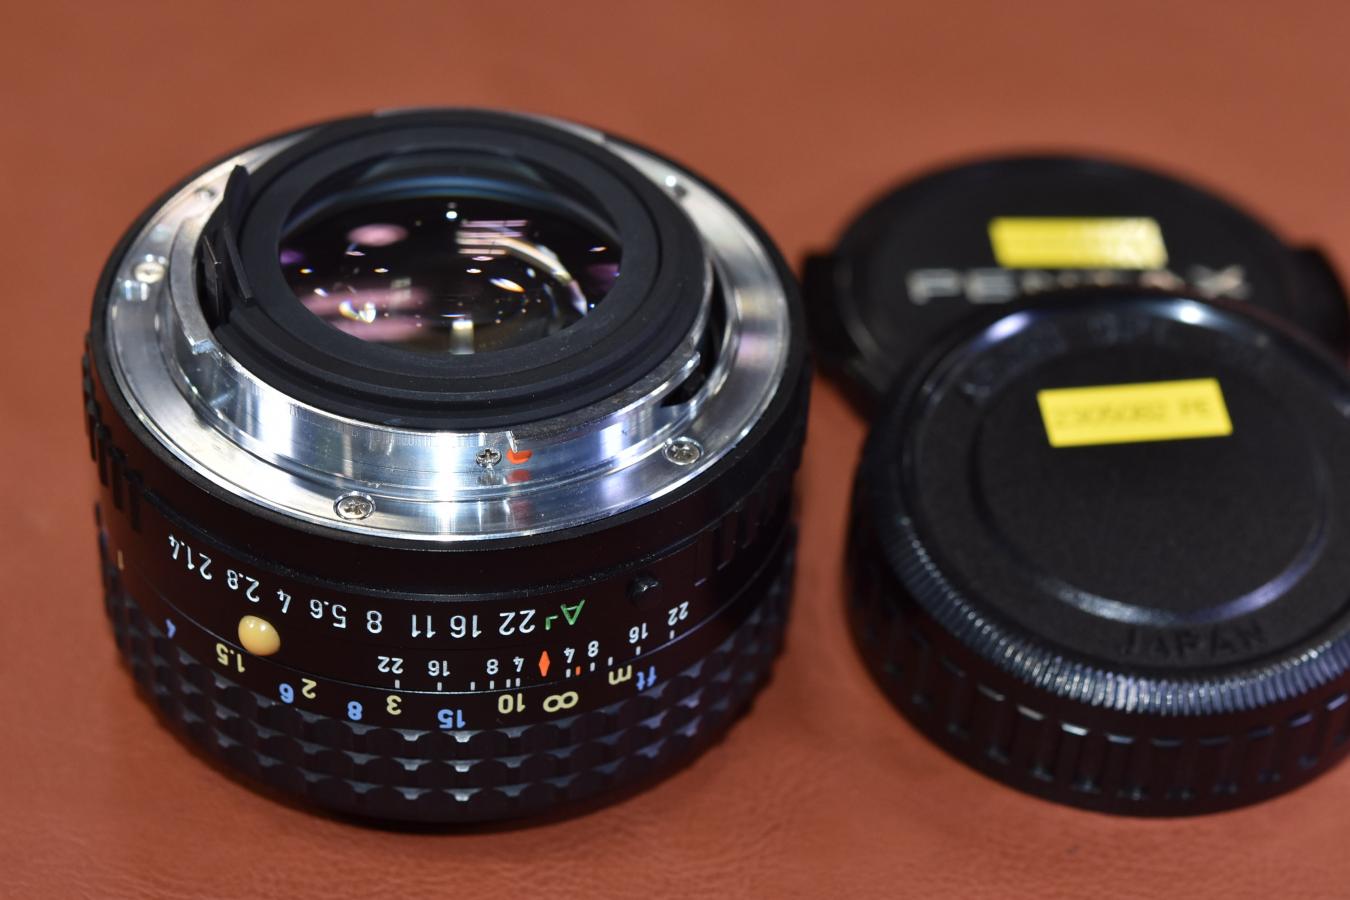 smc PENTAX-A 1:1.4 50mm ペンタックス レンズ